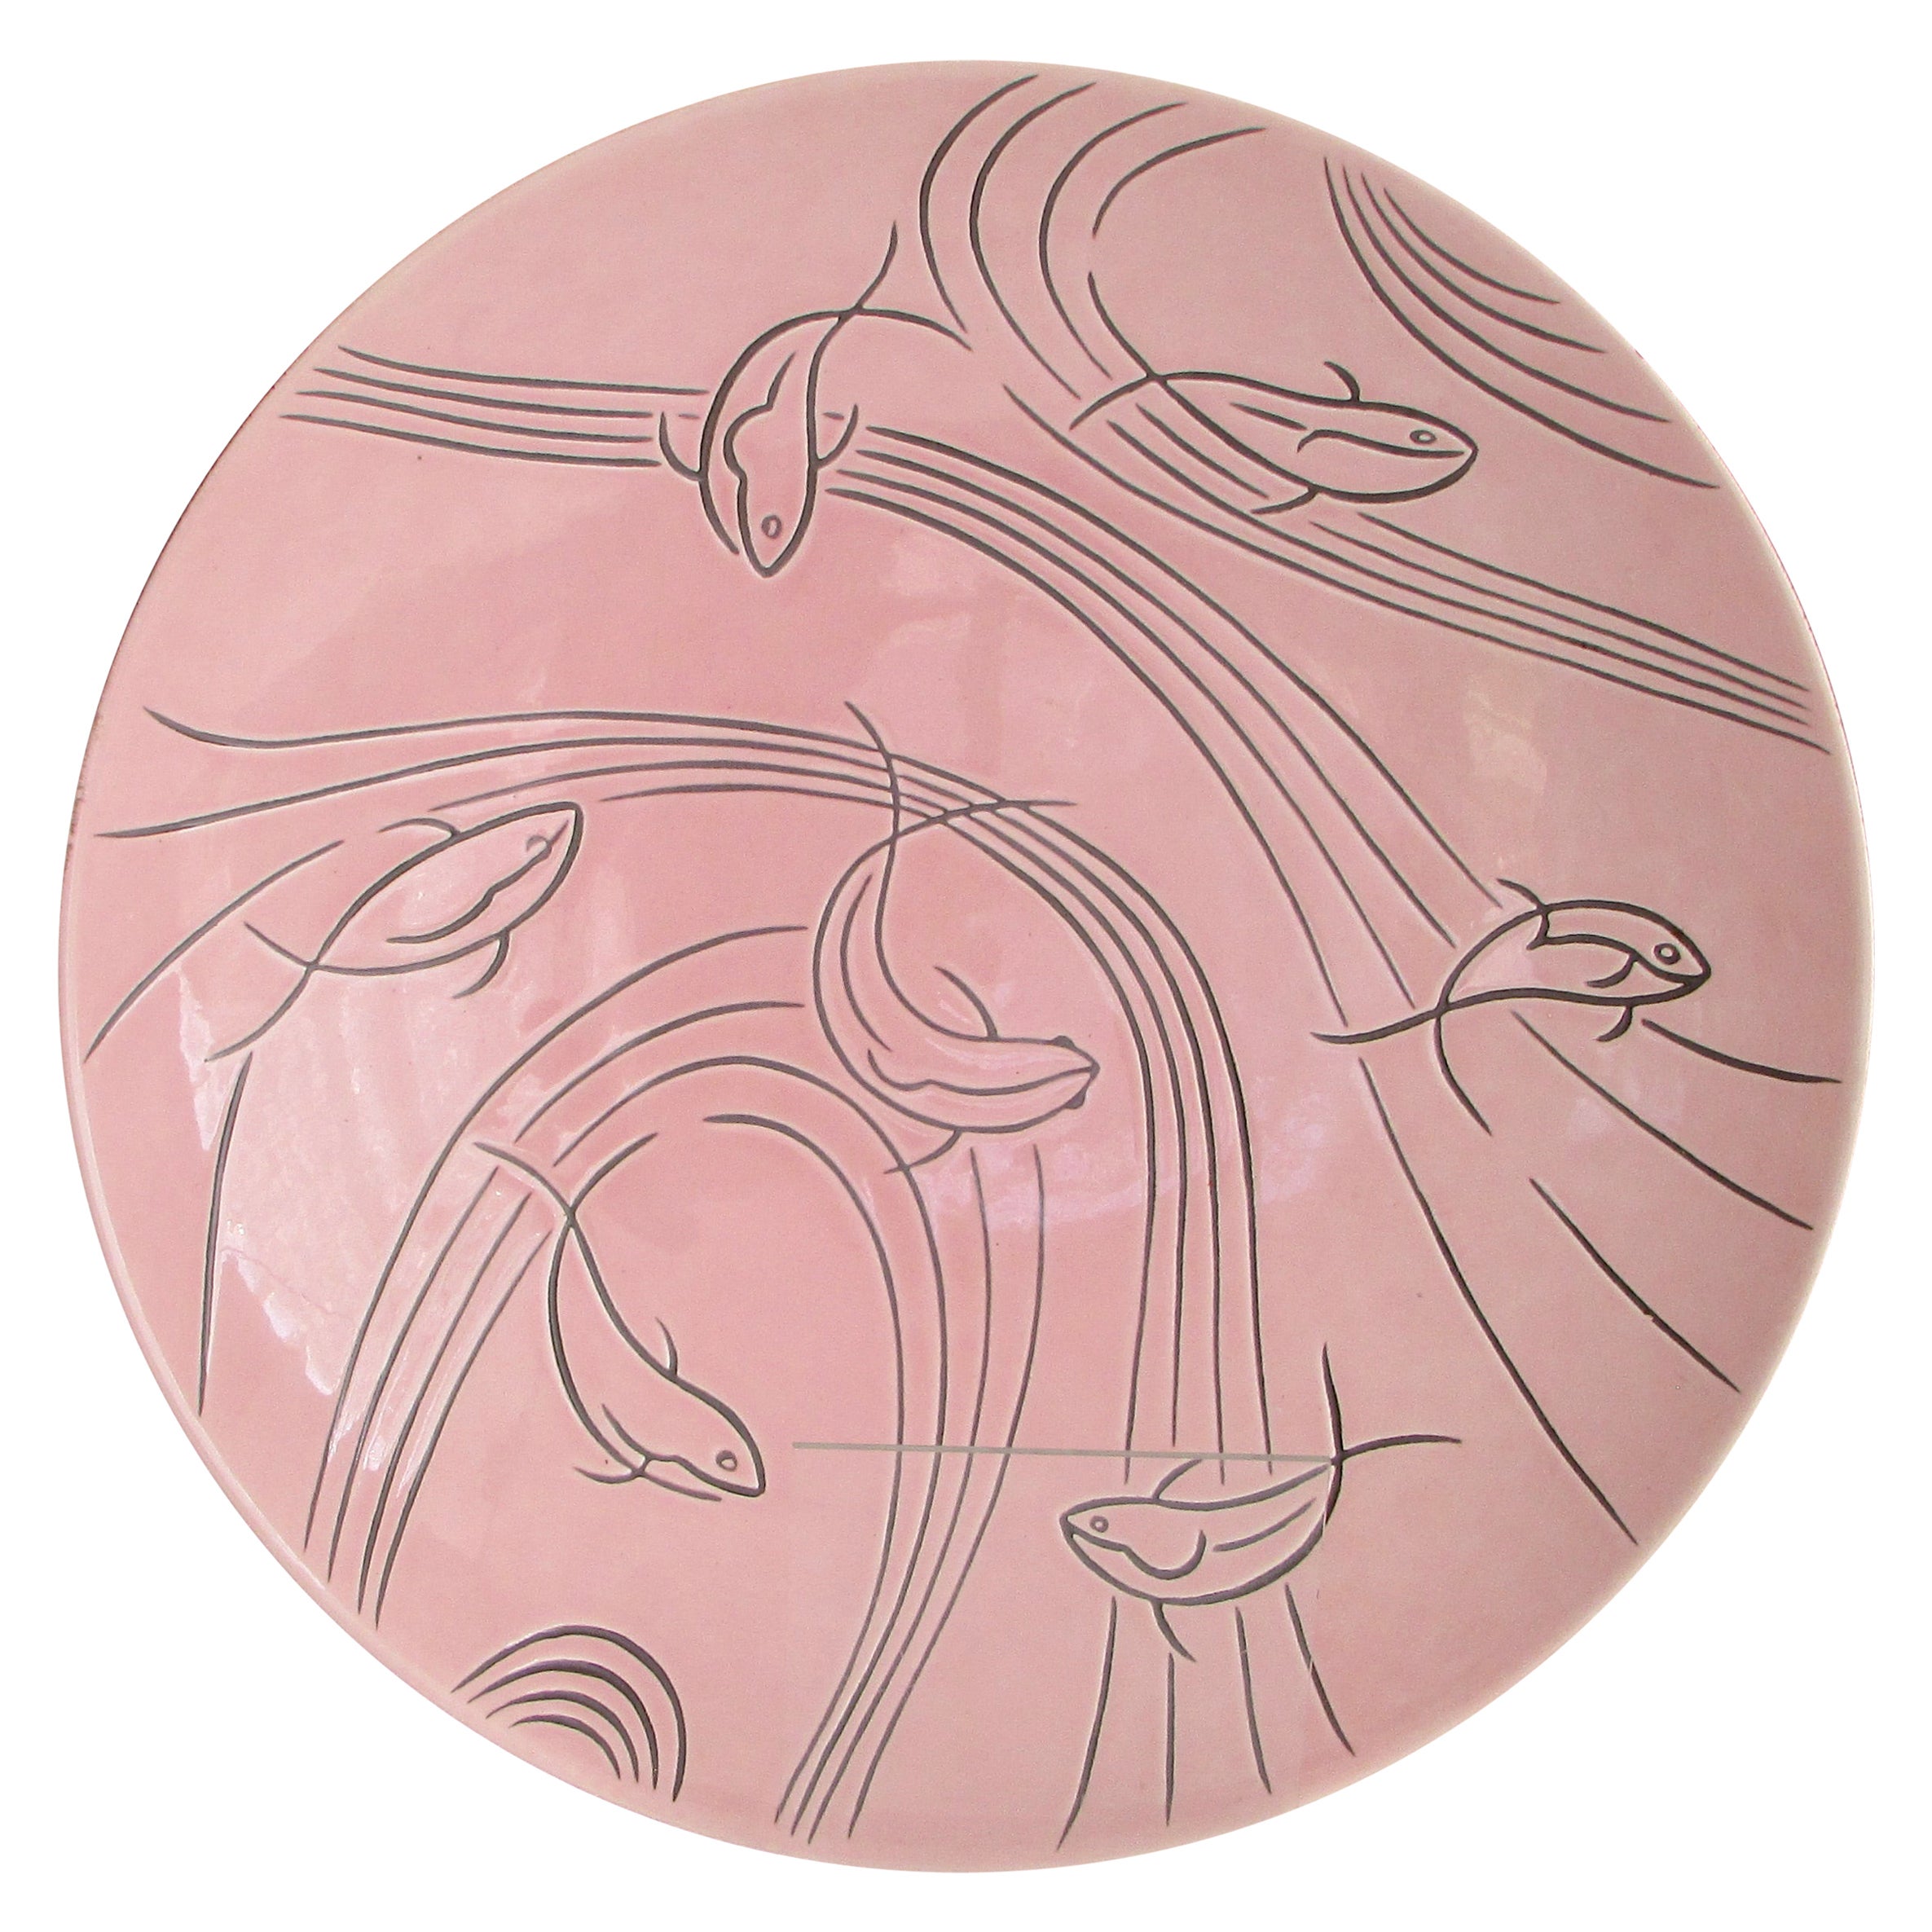 Roselane Pottery of Pasadena Pink Salad Bowl with Incised Modernist Fish Design